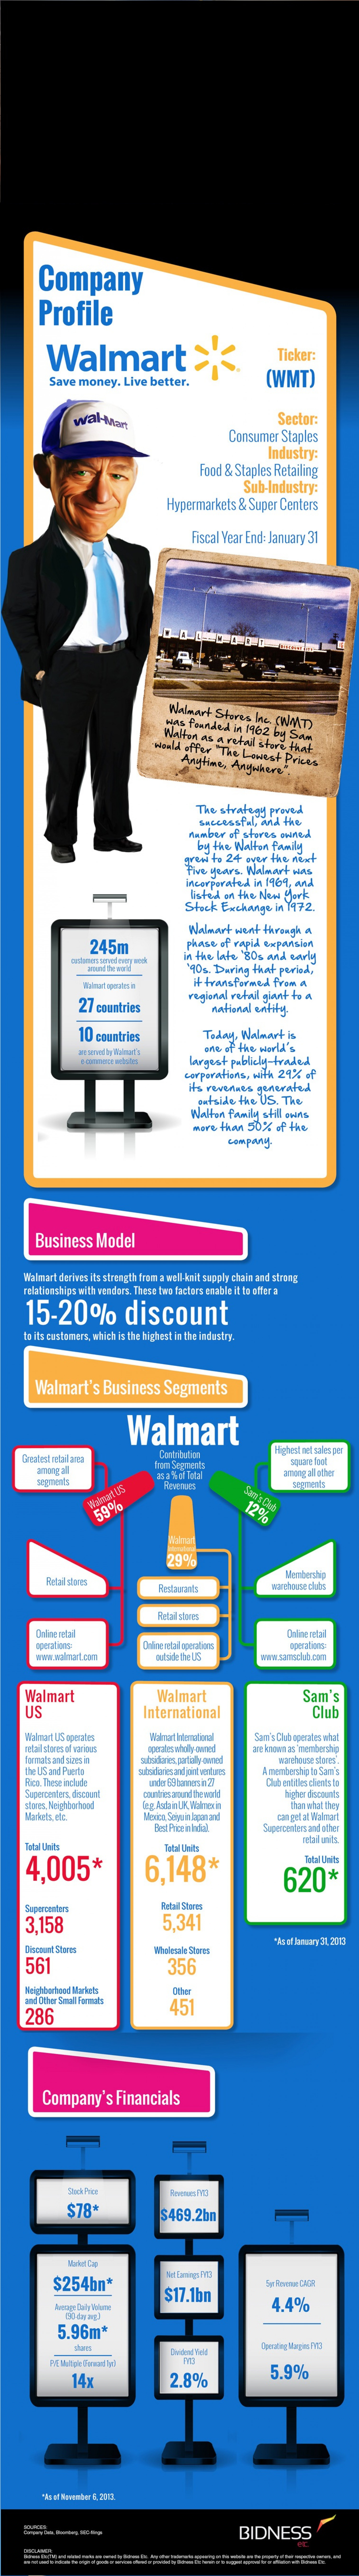 Walmart Company Description Infographic